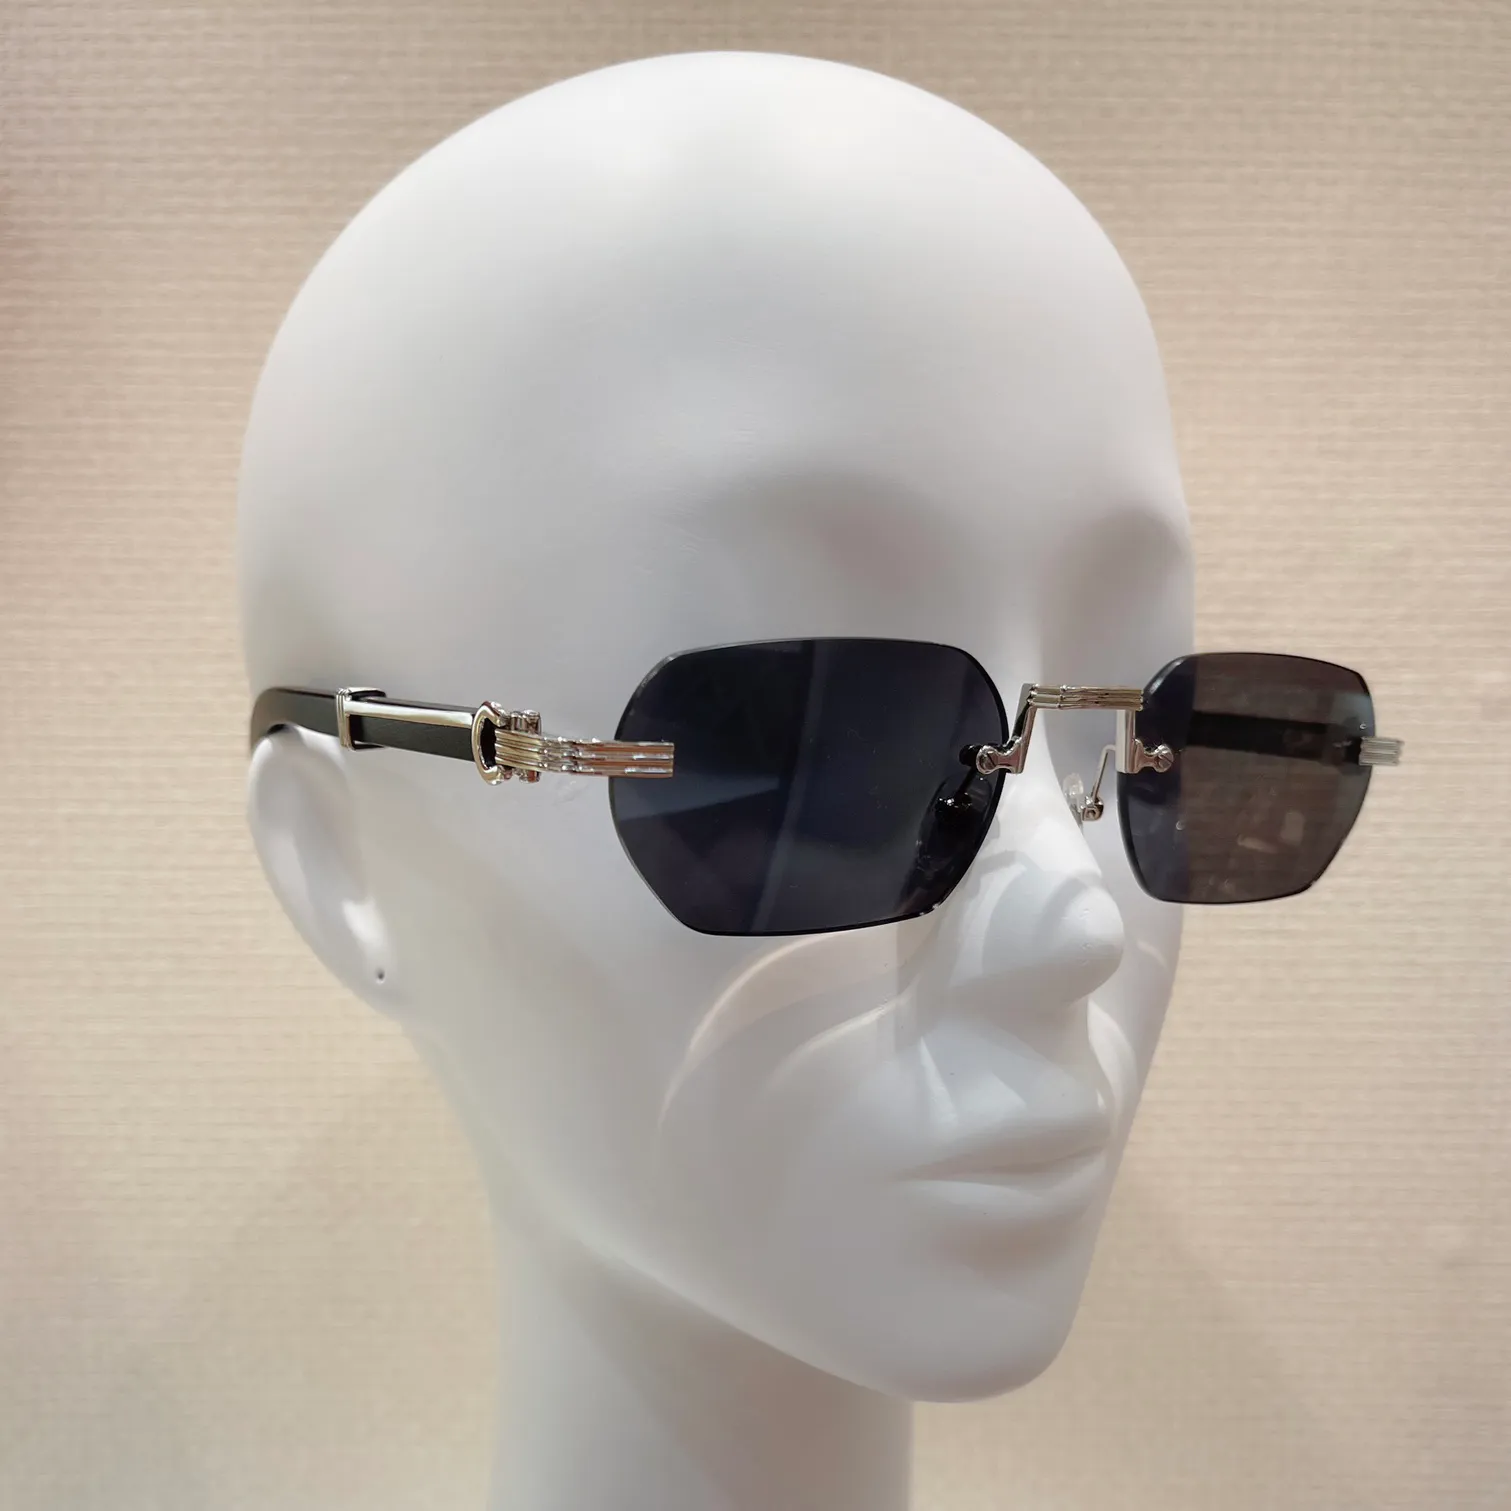 Gümüş Ahşap Çoğlu Güneş Gözlüğü Vintage Style Mens Shades Sonnenbrille Sunnies Gafas de Sol UV400 Gözlük Kutu